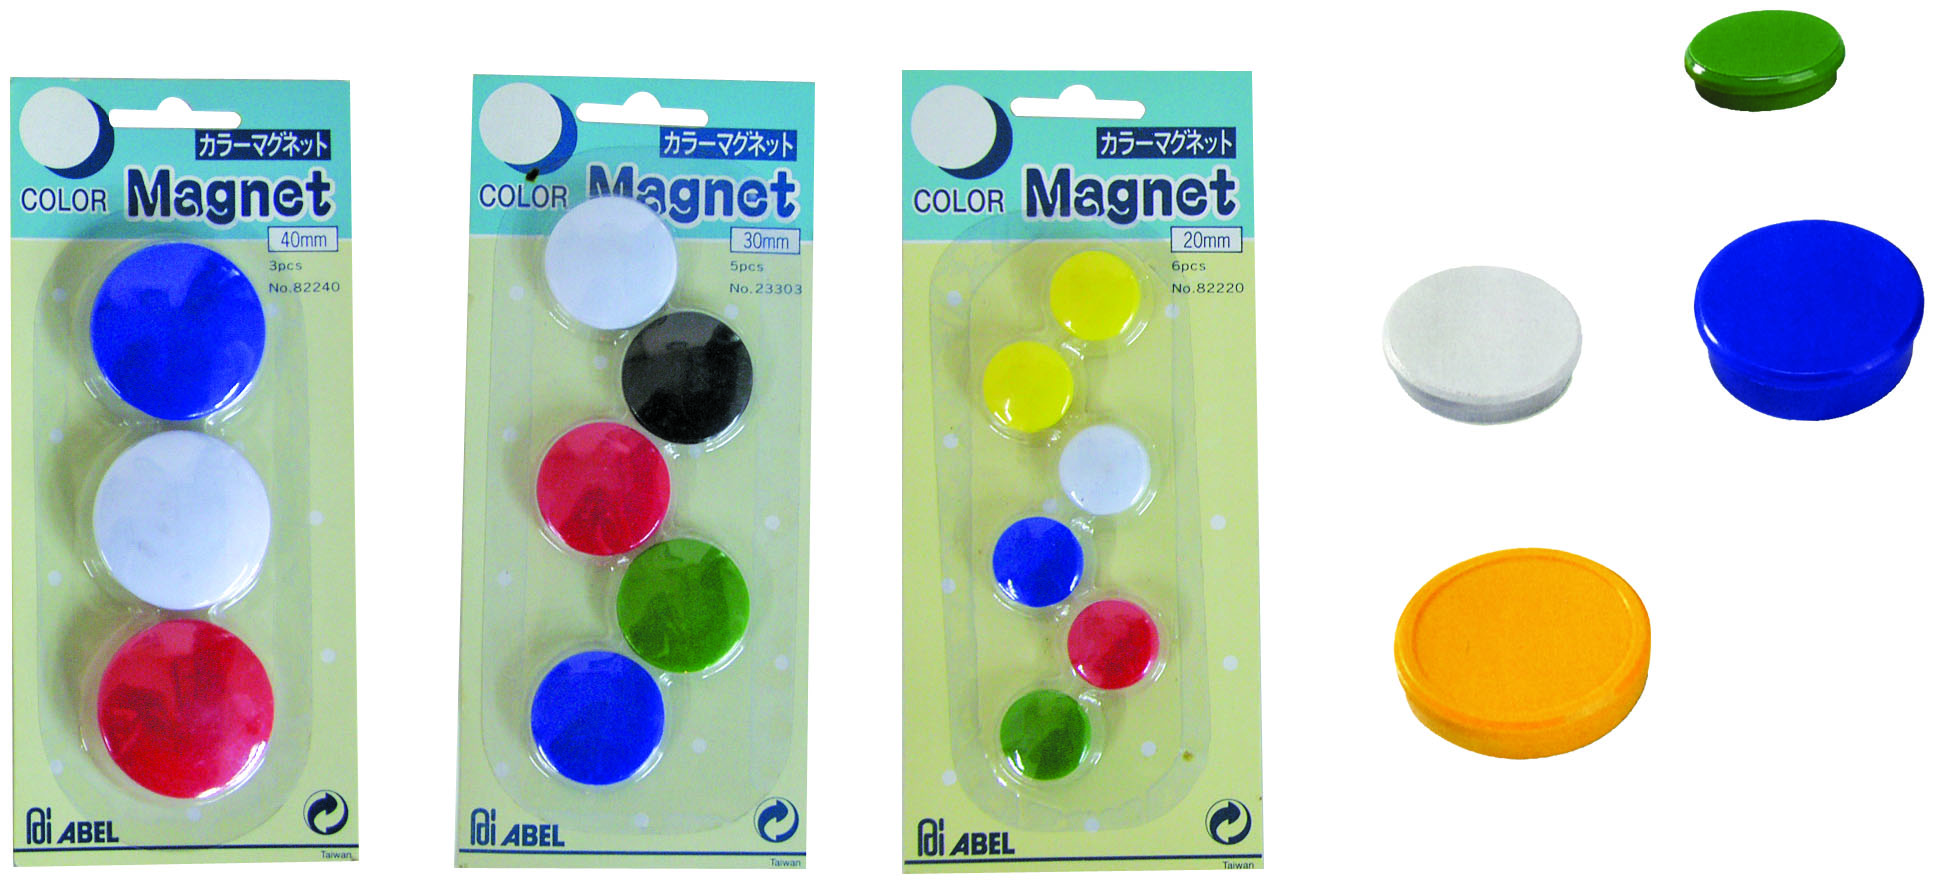 +#Magnets for white boards 5 pcs , diameter 30mm